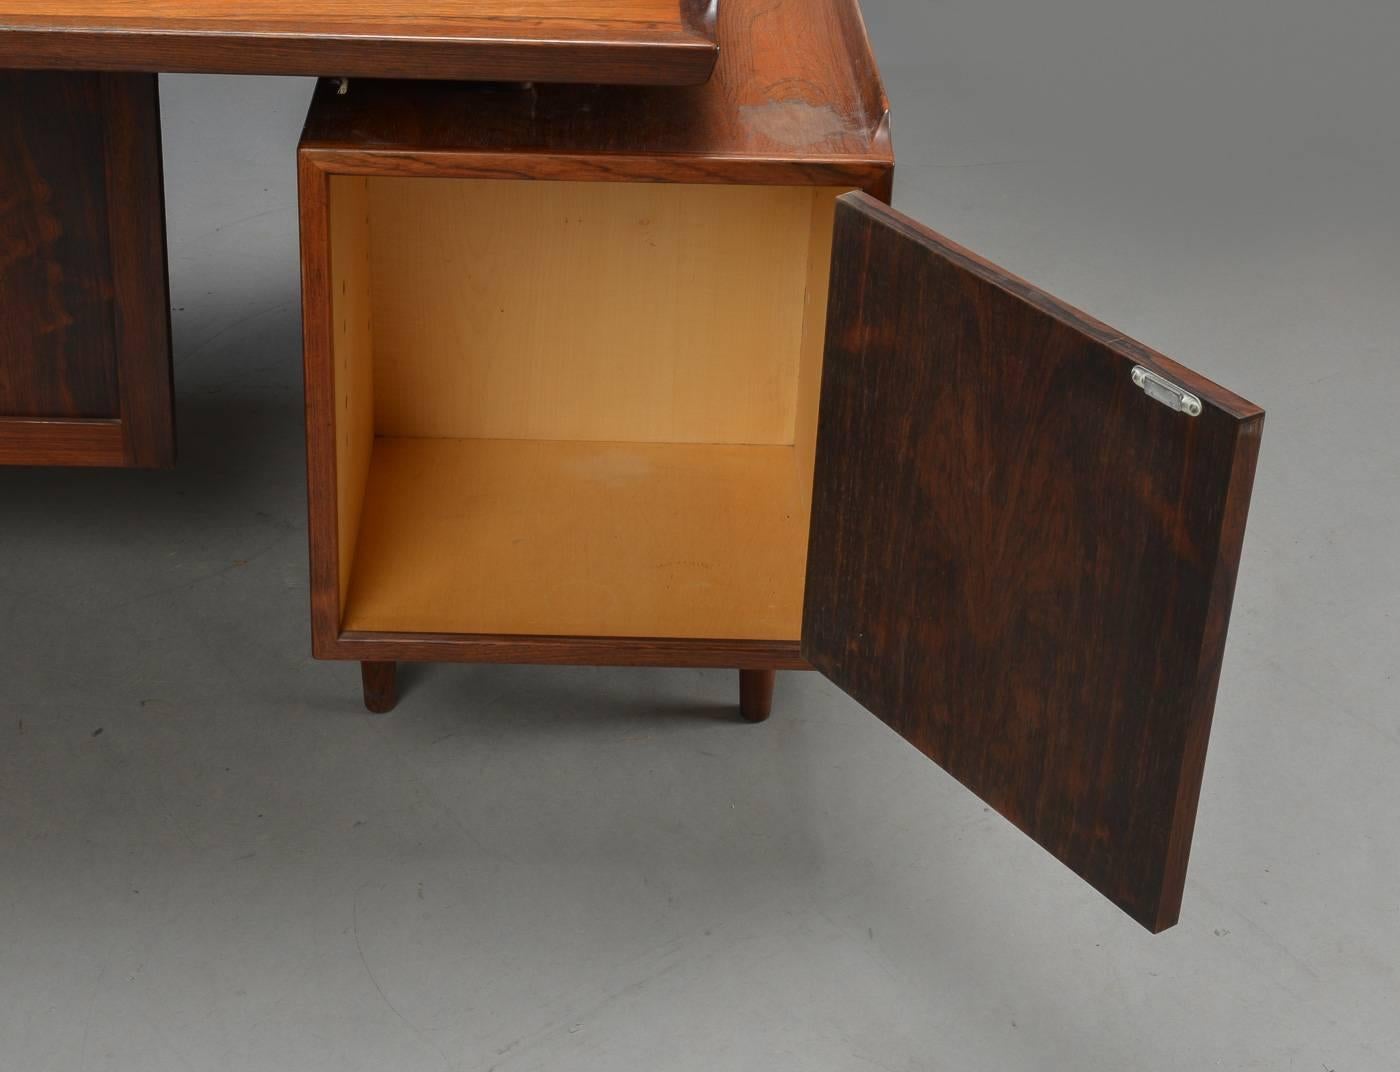 Arne Vodder Rosewood Desk and Sideboard Made by Sibast, circa 1960 For Sale 2